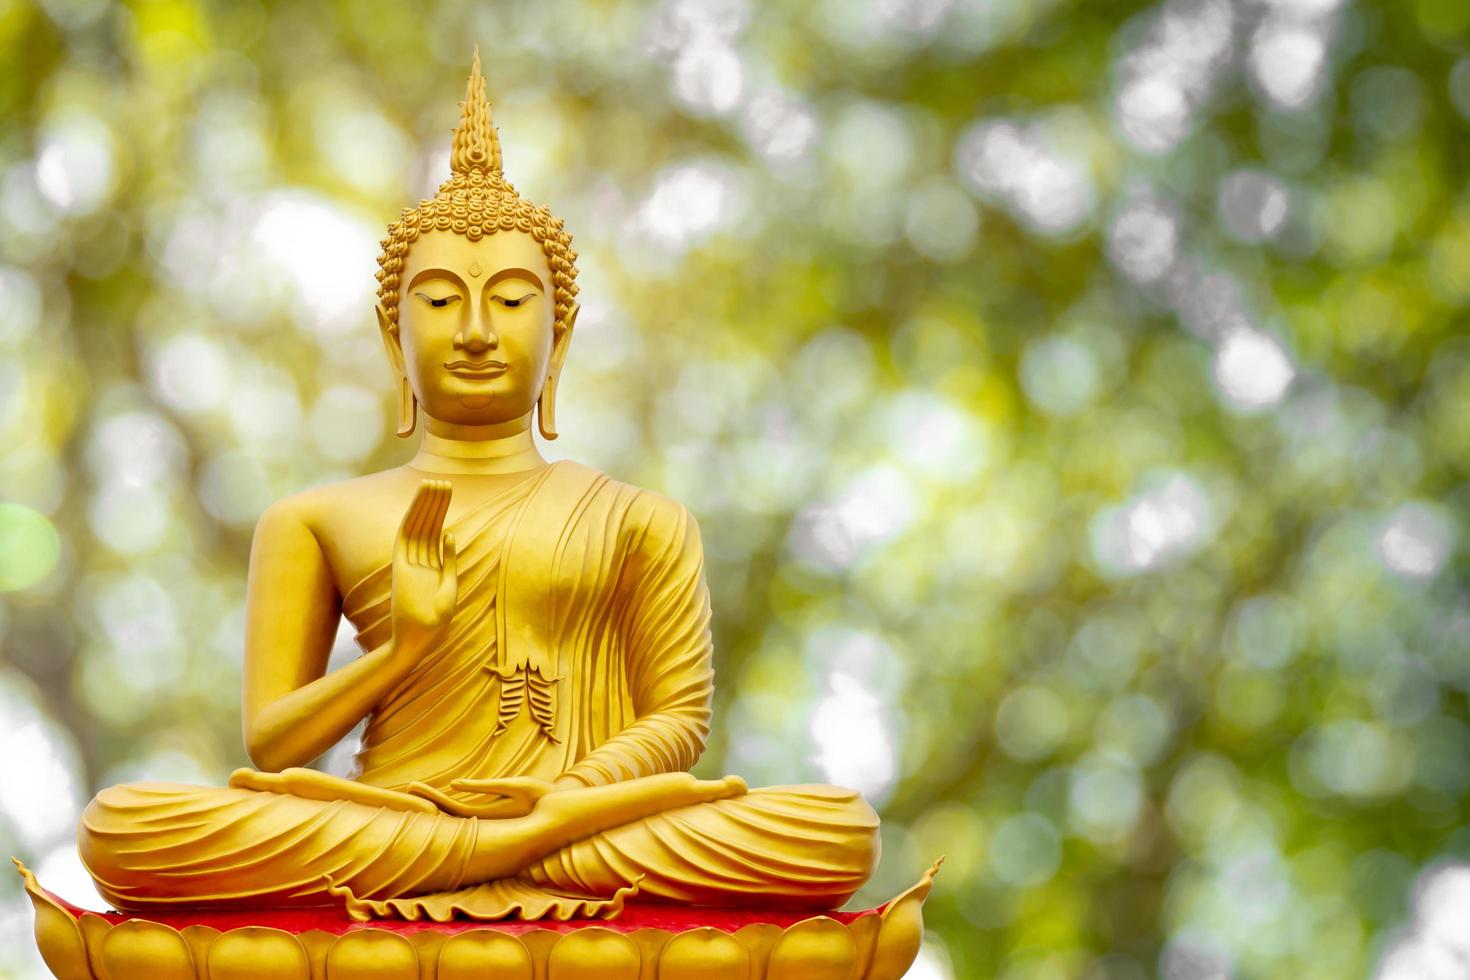 Golden Buddha image under the Bodhi leaf, natural background photo